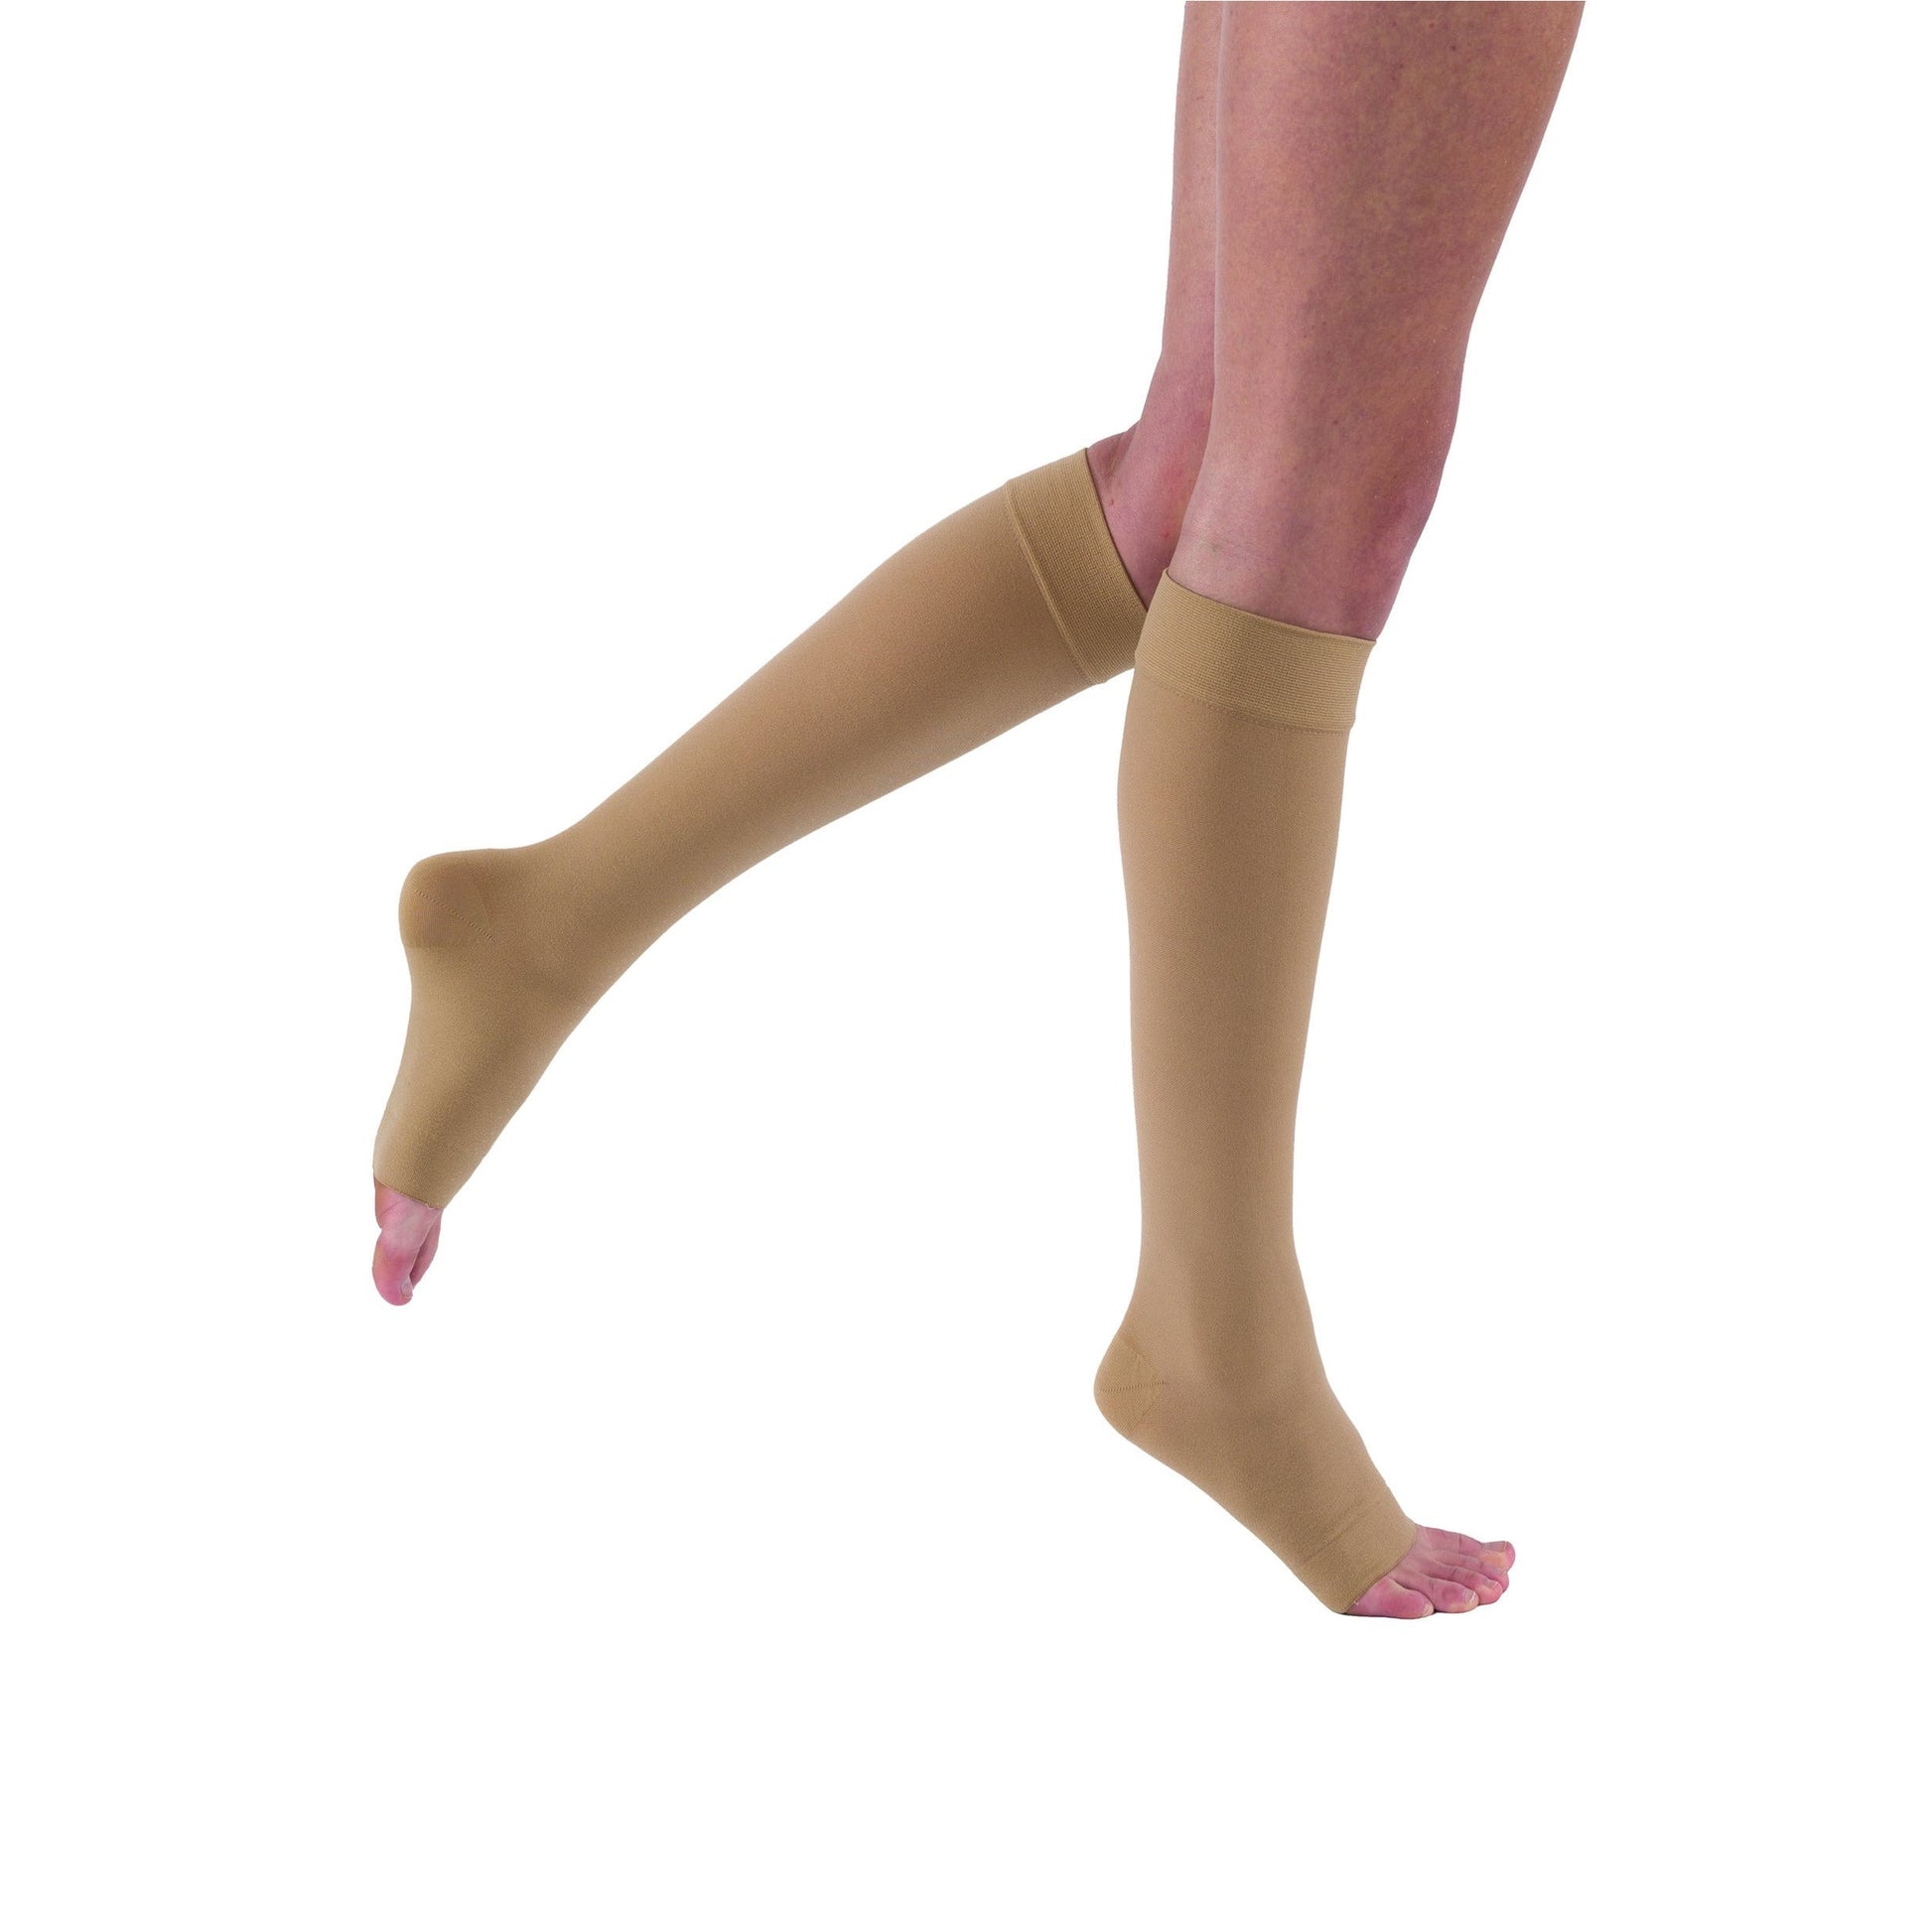 JOBST forMen Casual Compression Socks, 20-30 mmHg, Knee High, Closed Toe,  Black, X-Large Full Calf 